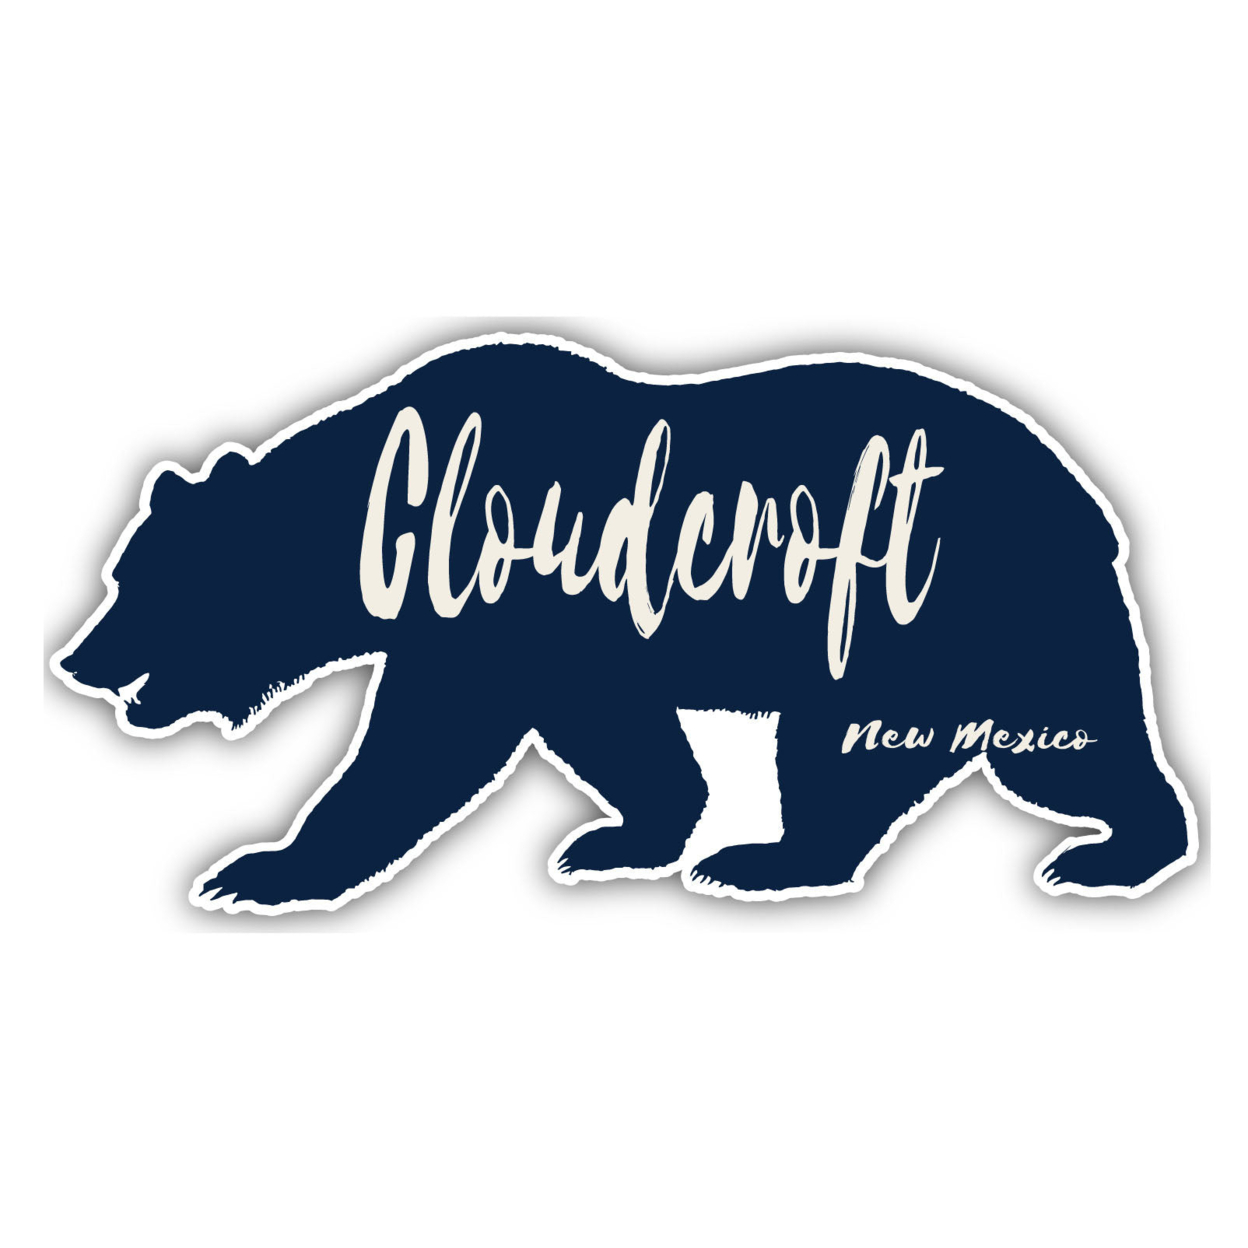 Cloudcroft New Mexico Souvenir Decorative Stickers (Choose Theme And Size) - Single Unit, 8-Inch, Adventures Awaits